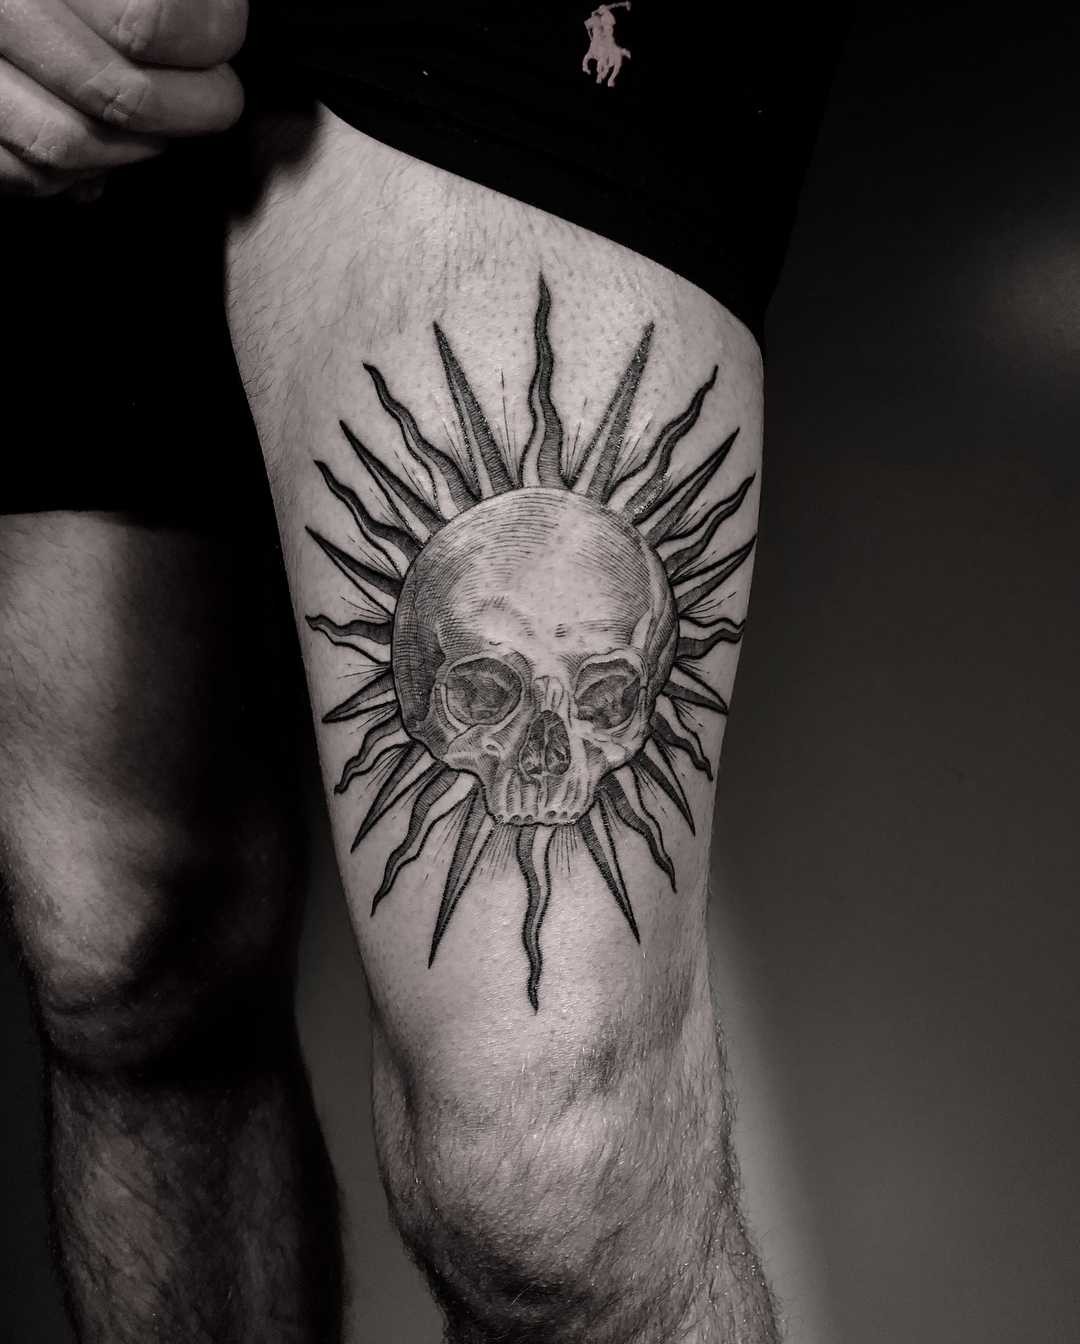 Sun and skull tattoo